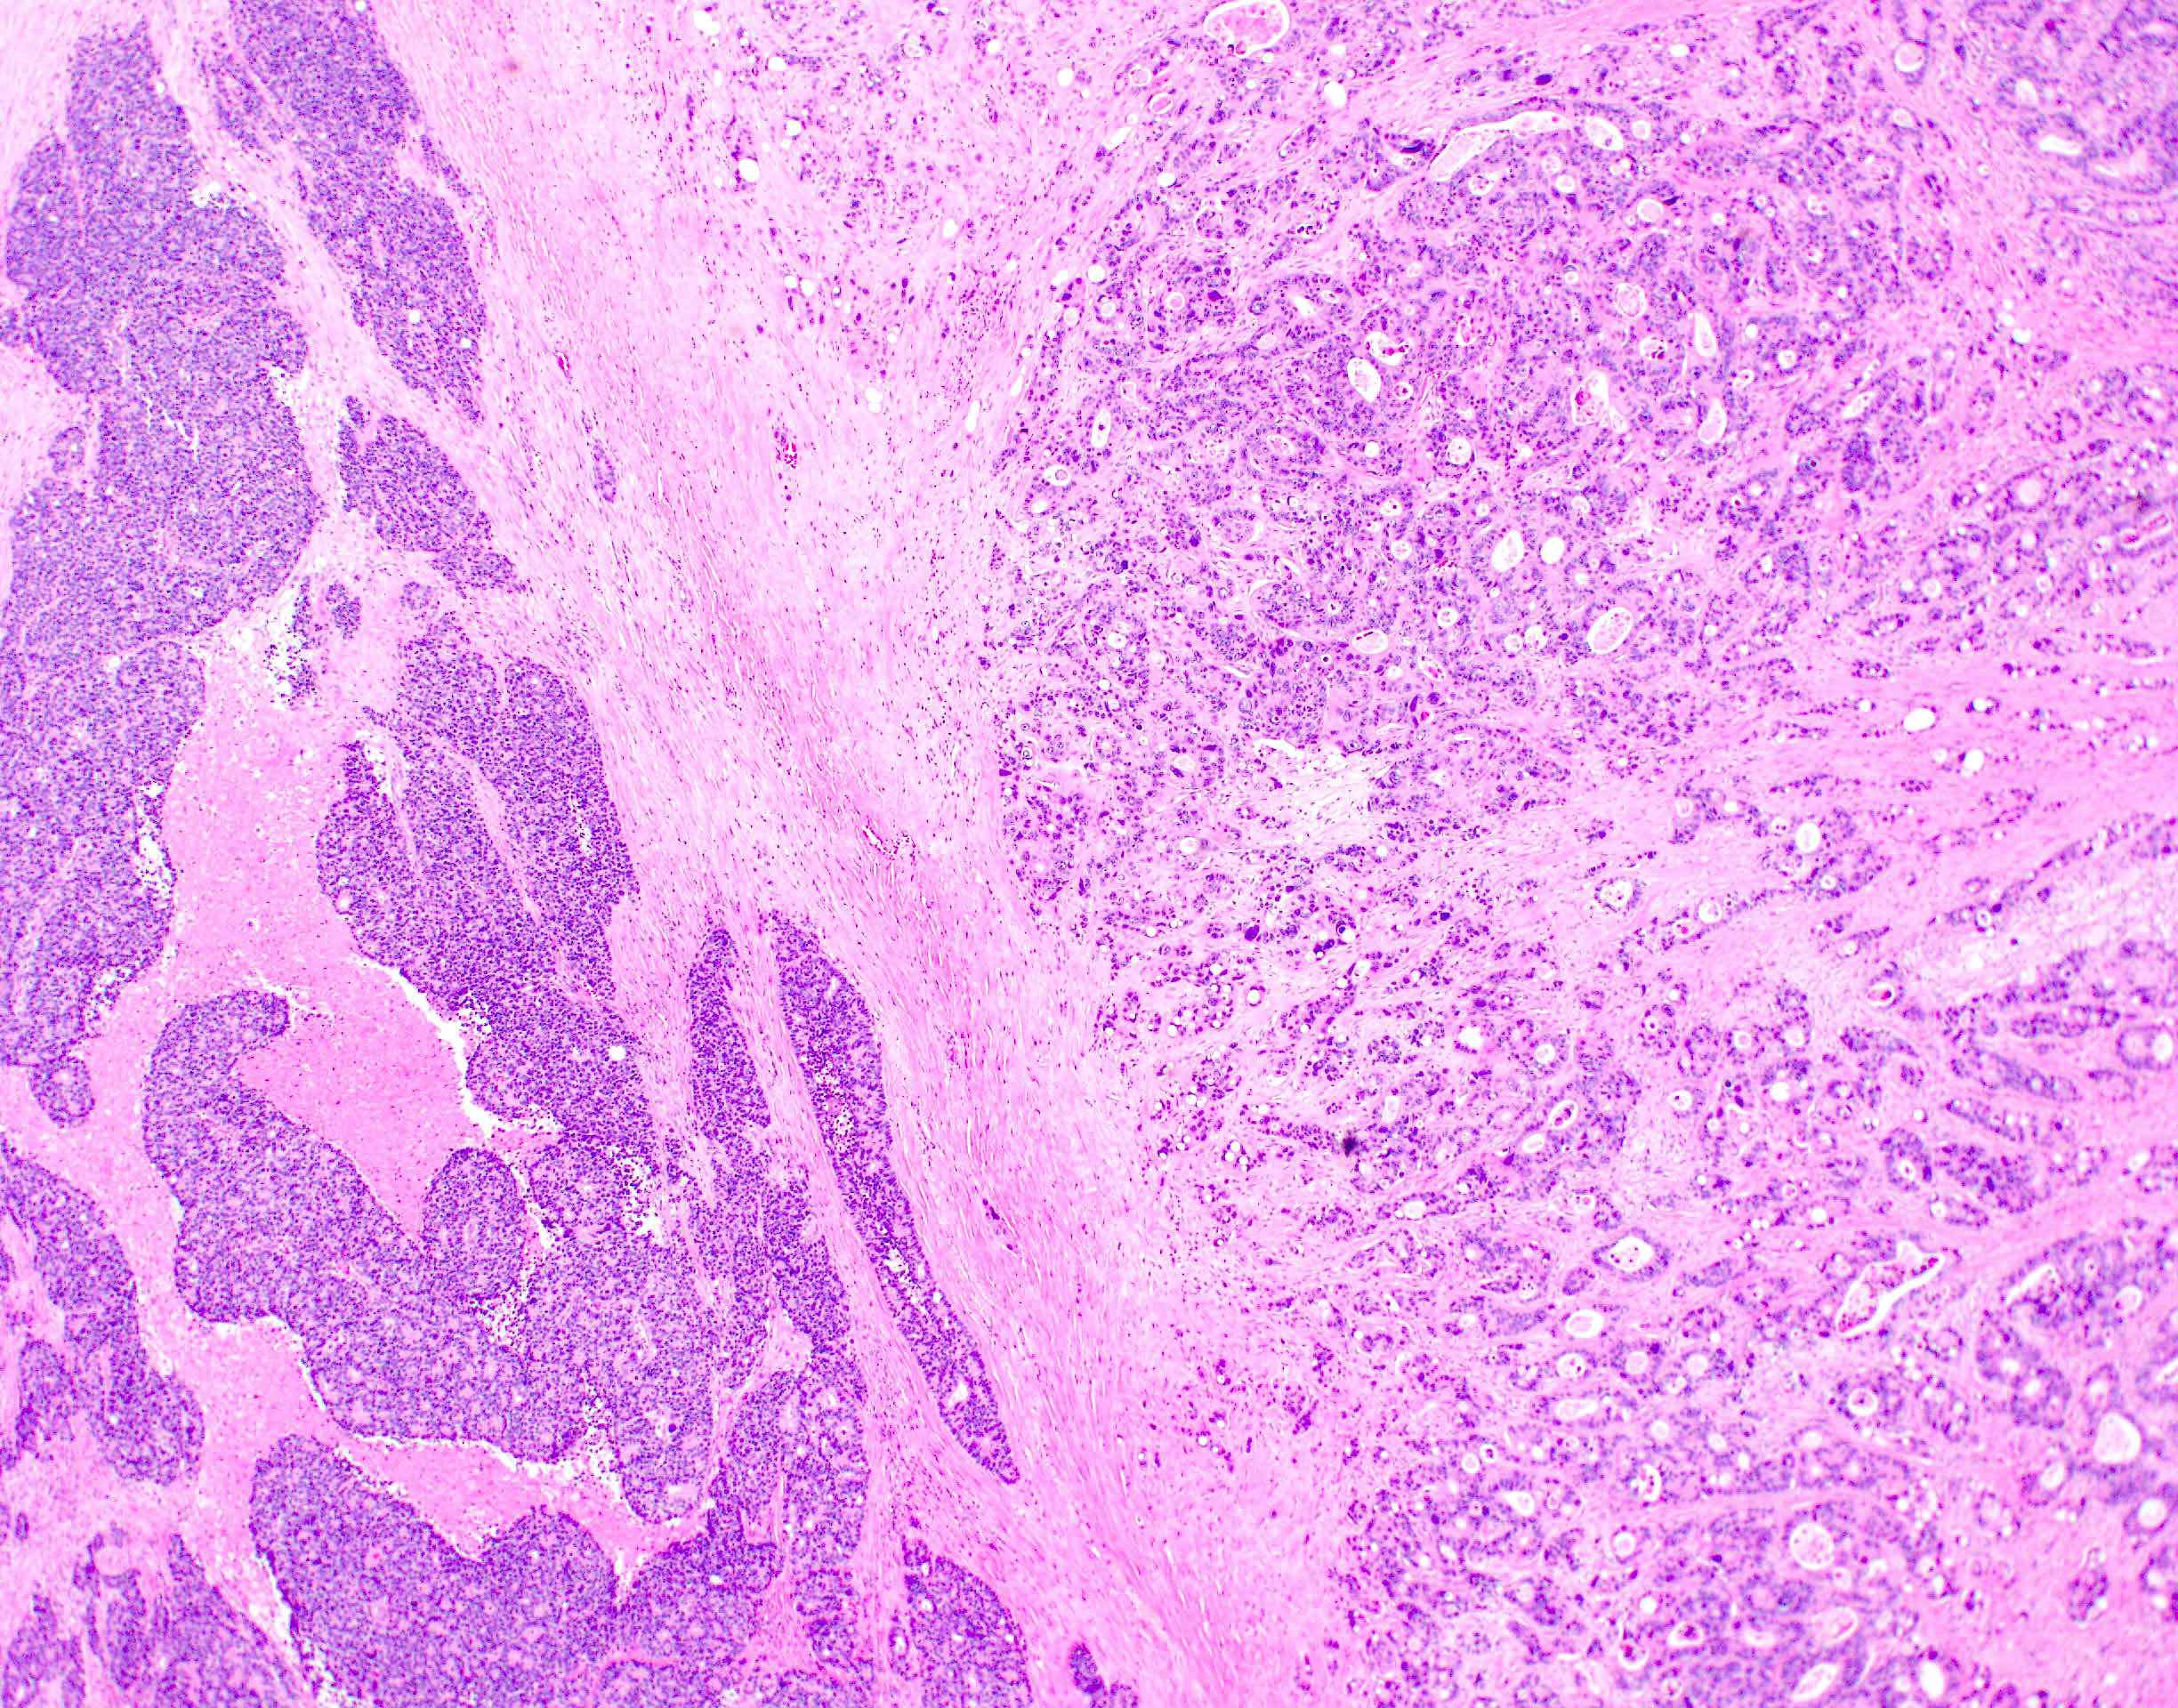 Mixed adenocarcinoma neuroendocrine carcinoma